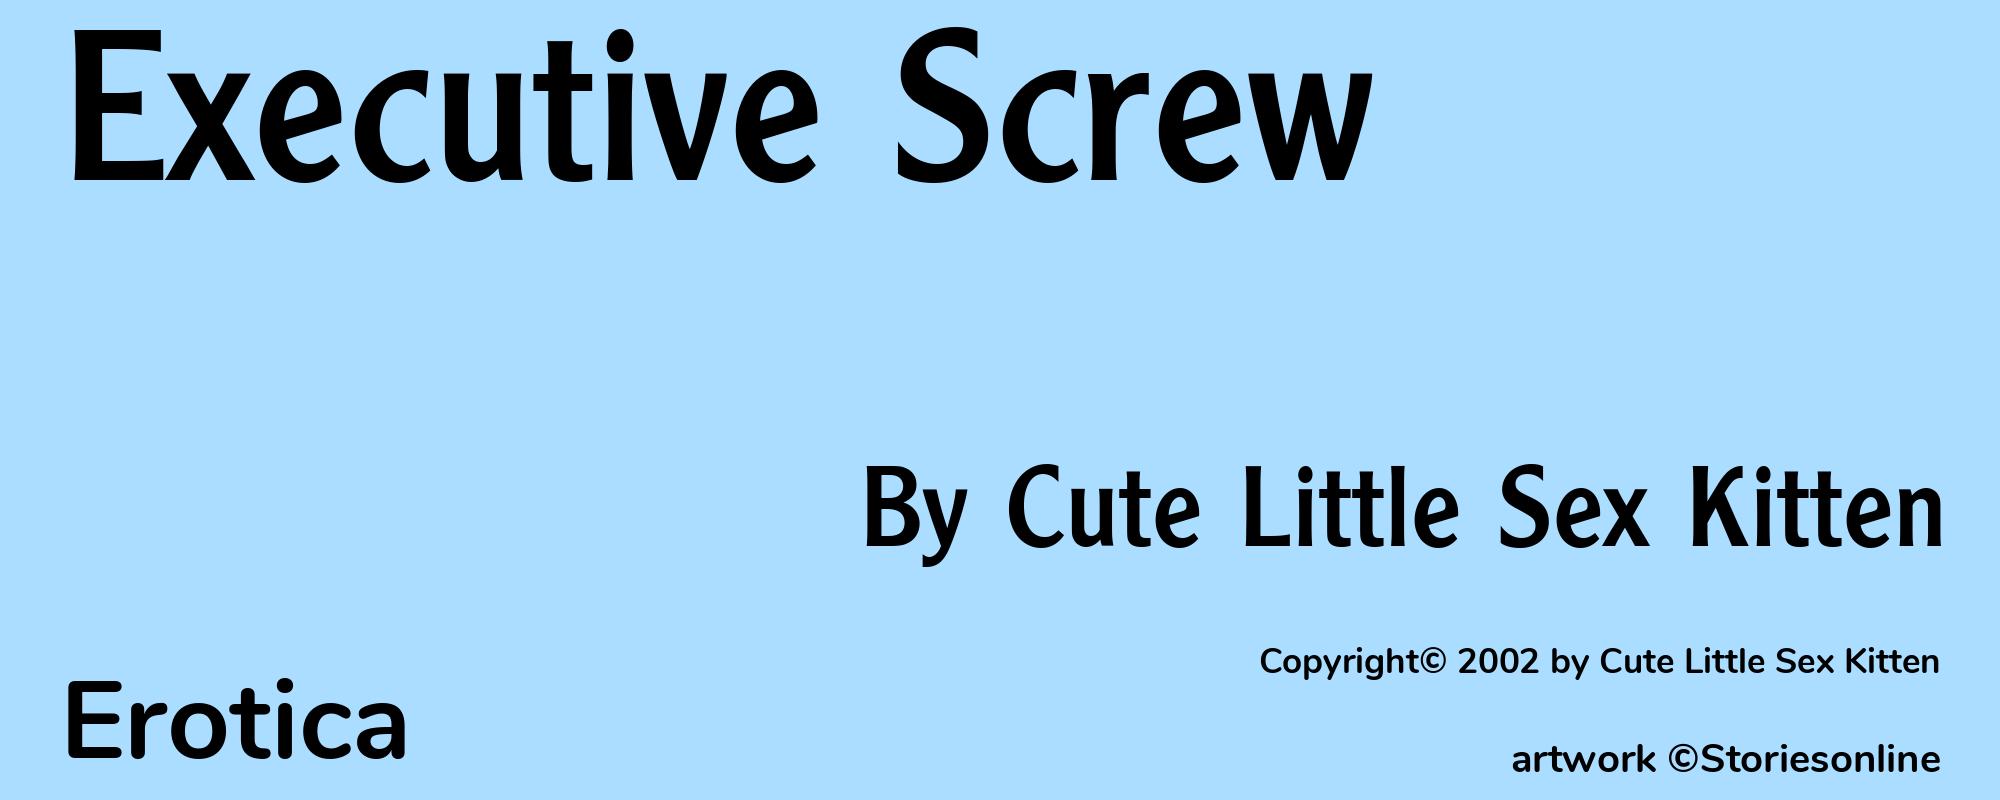 Executive Screw - Cover